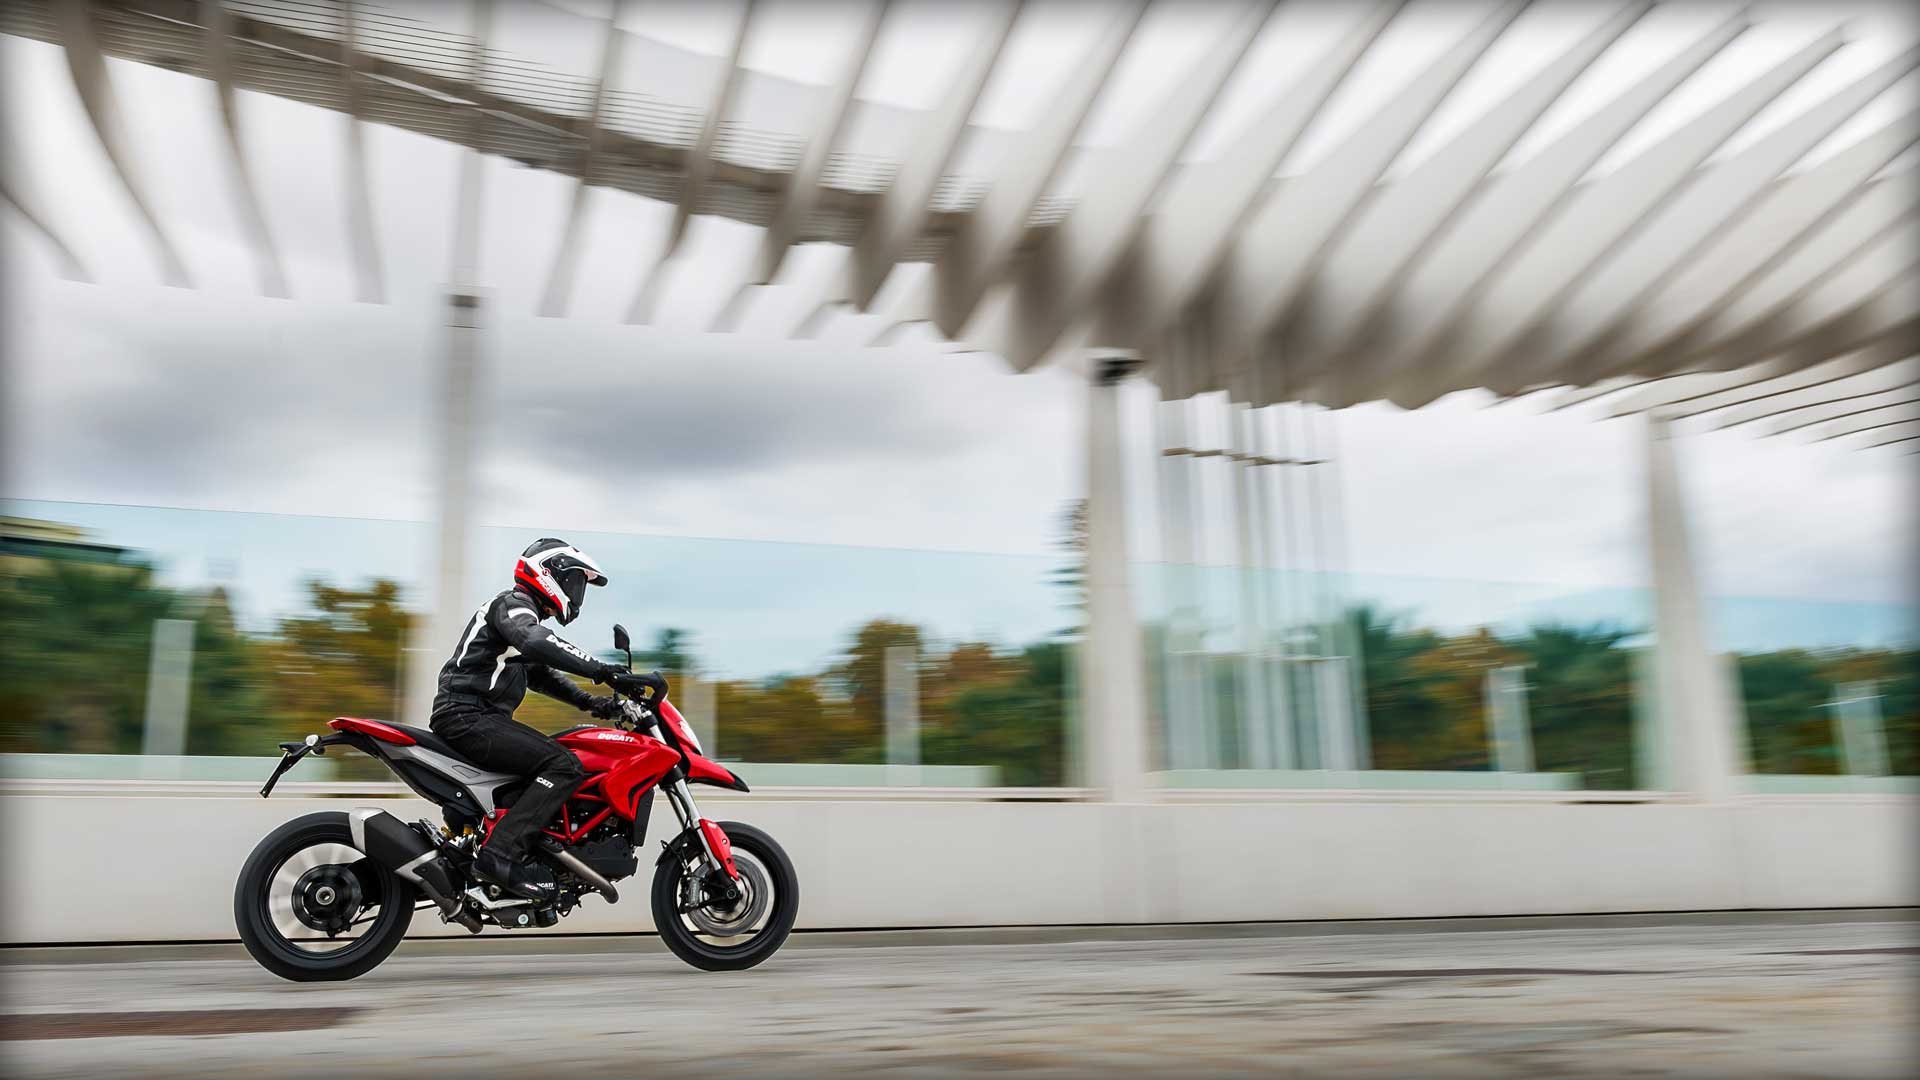 2014 Ducati Hypermotard 821